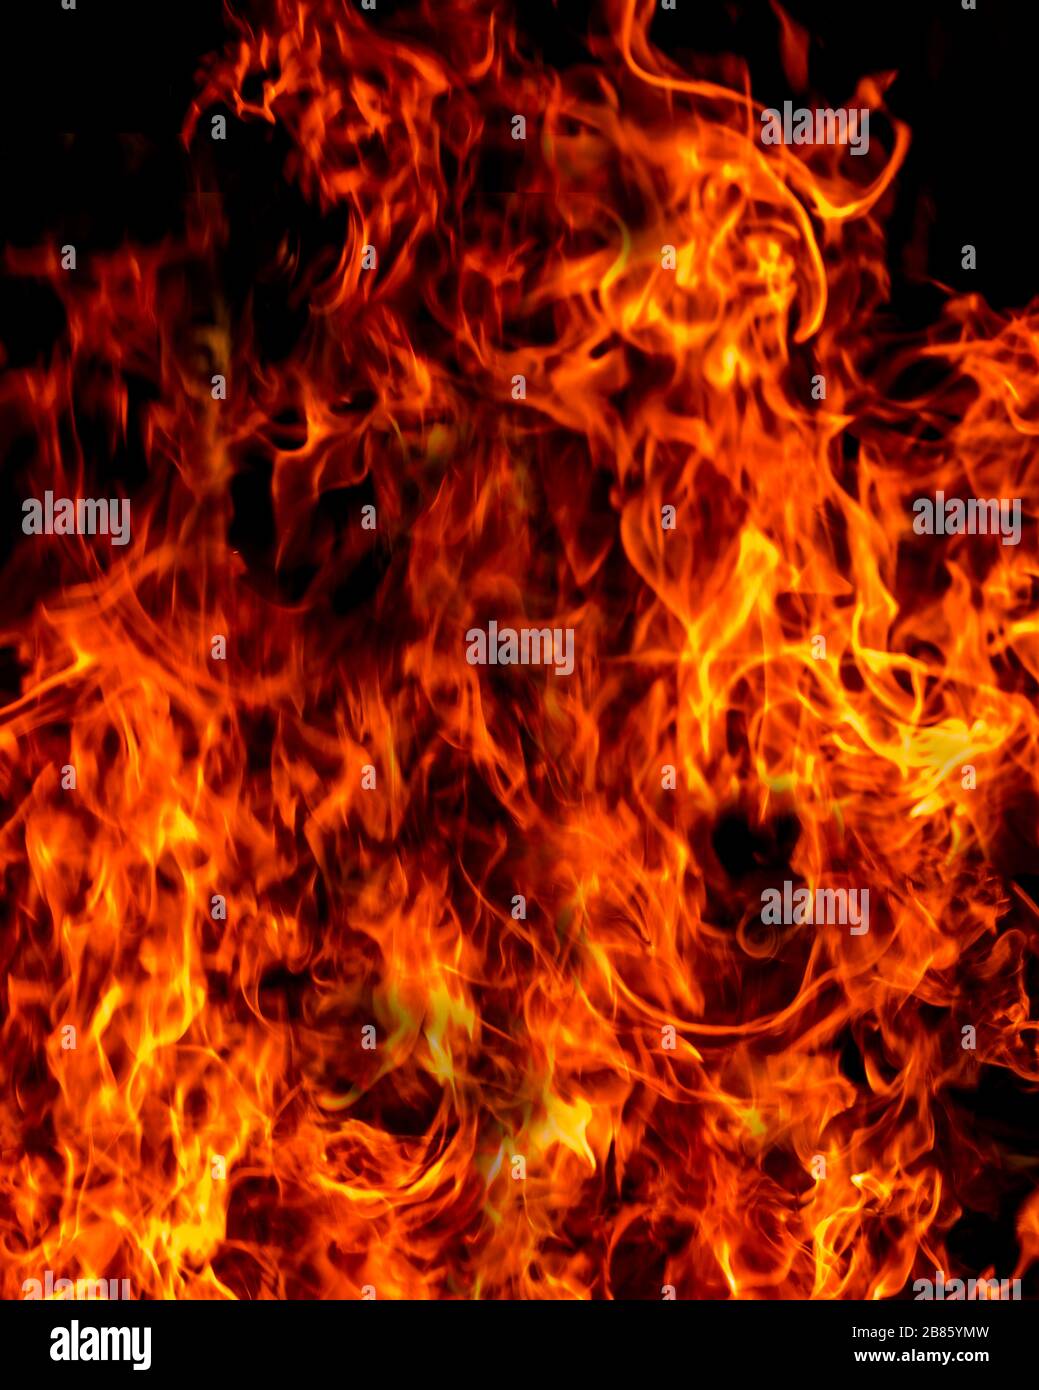 Fire flames on black background Kerala India. Stock Photo